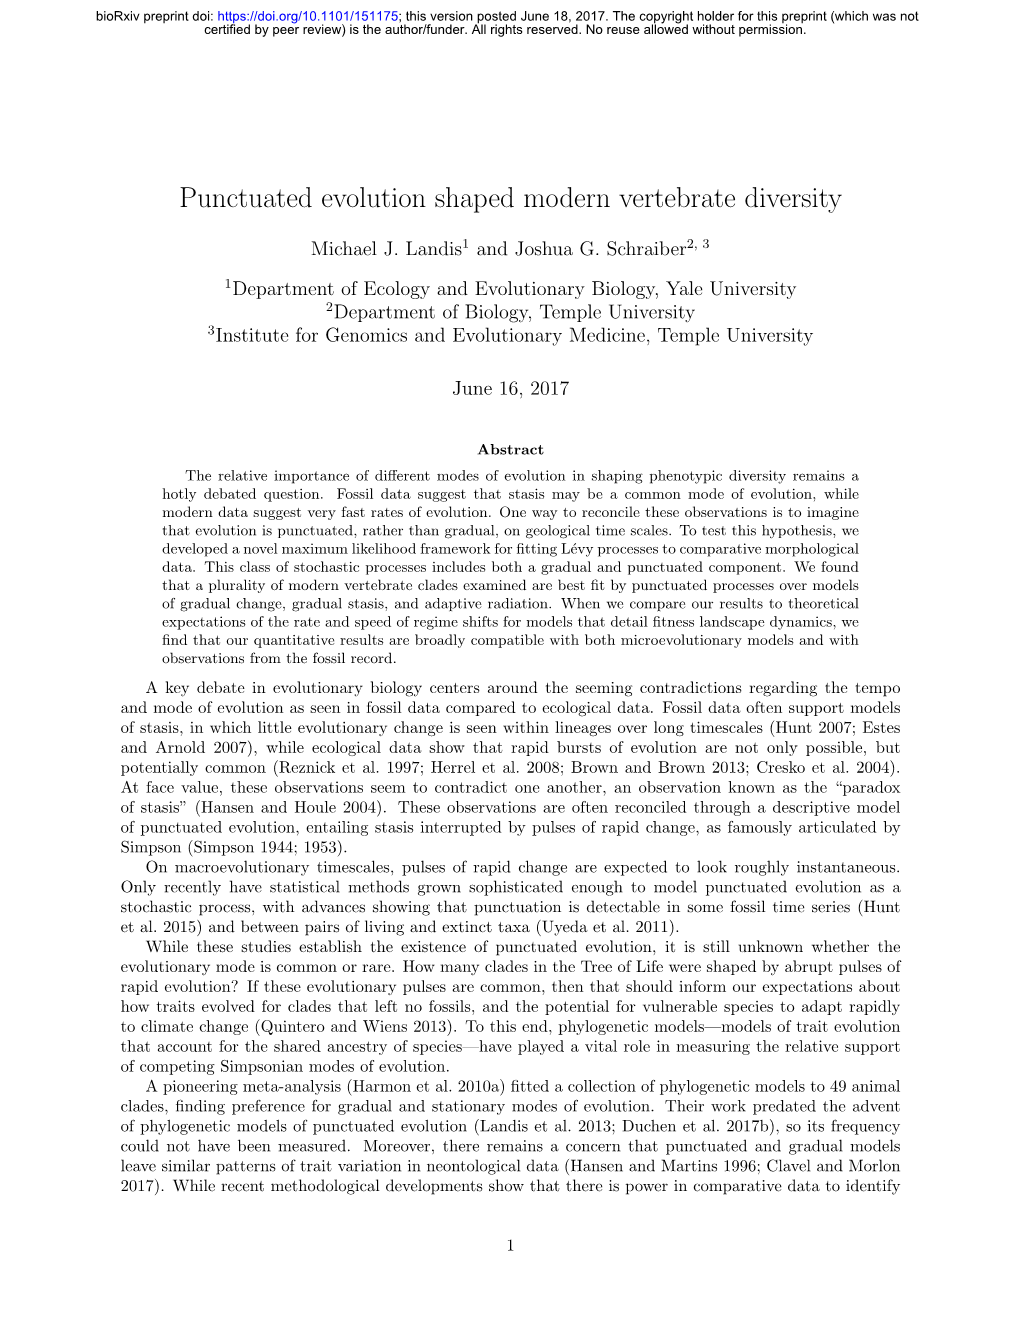 Punctuated Evolution Shaped Modern Vertebrate Diversity